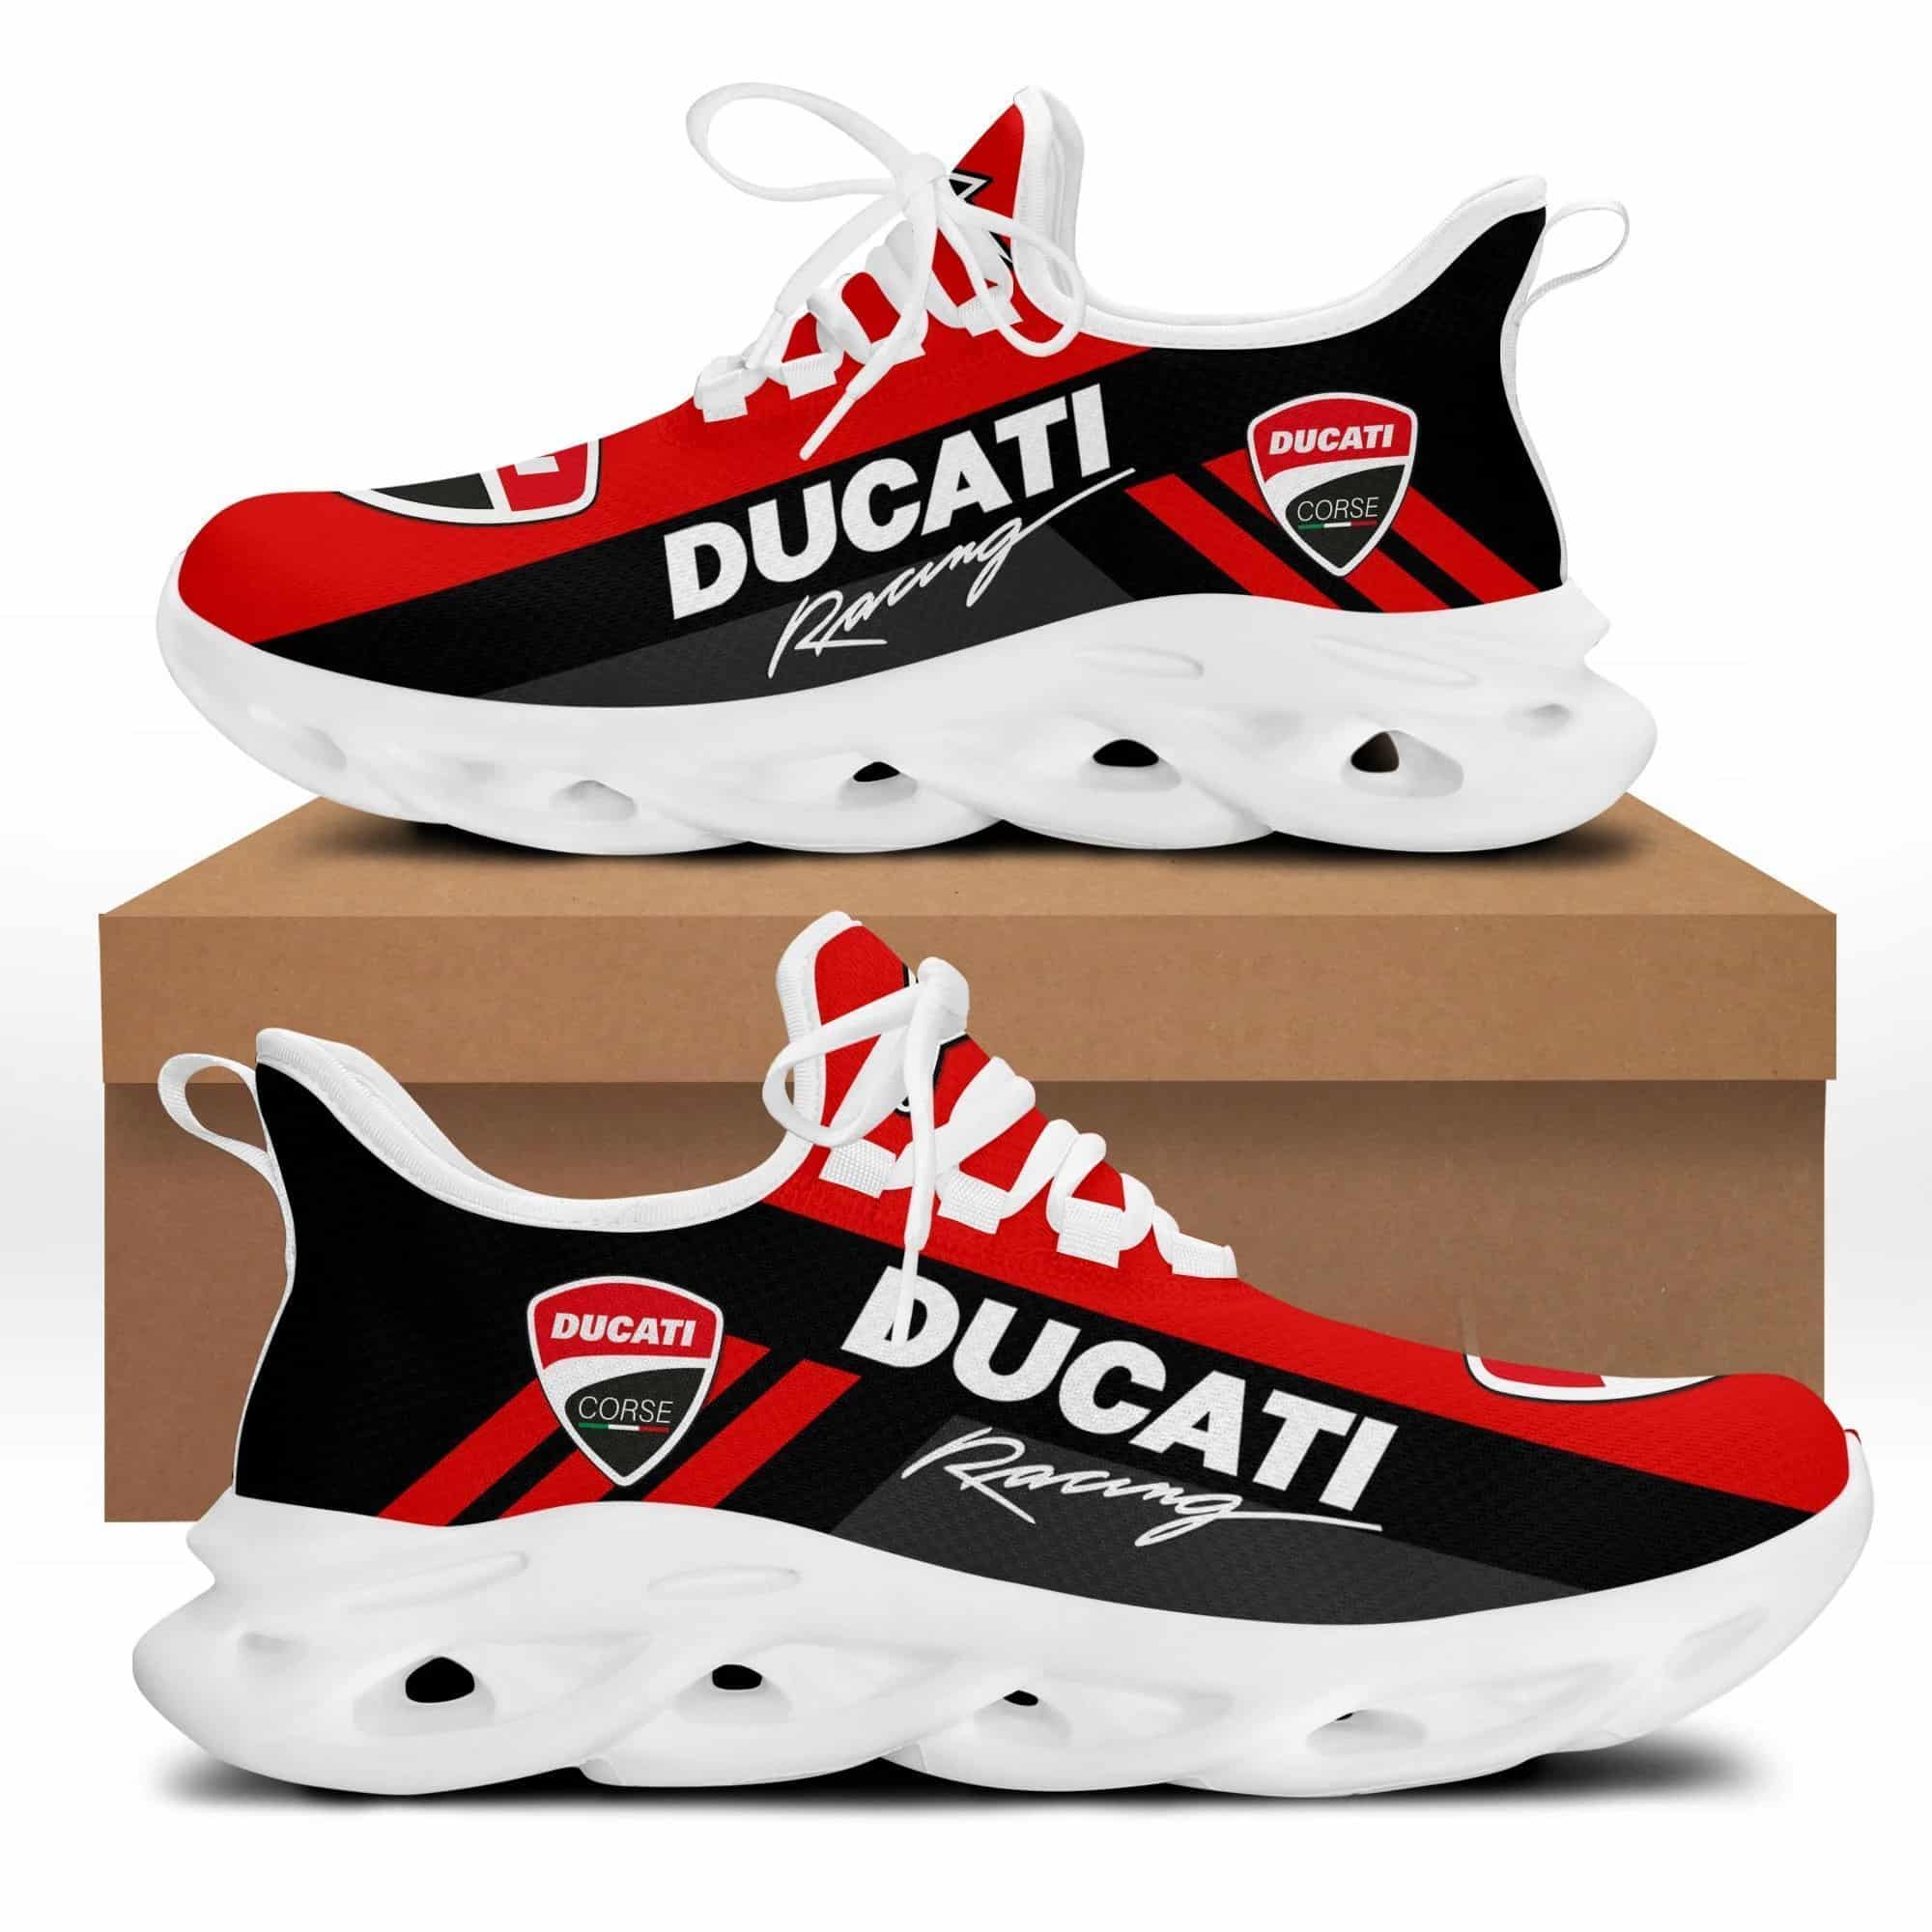 Ducati Racing Running Shoes Max Soul Shoes Sneakers Ver 3 2